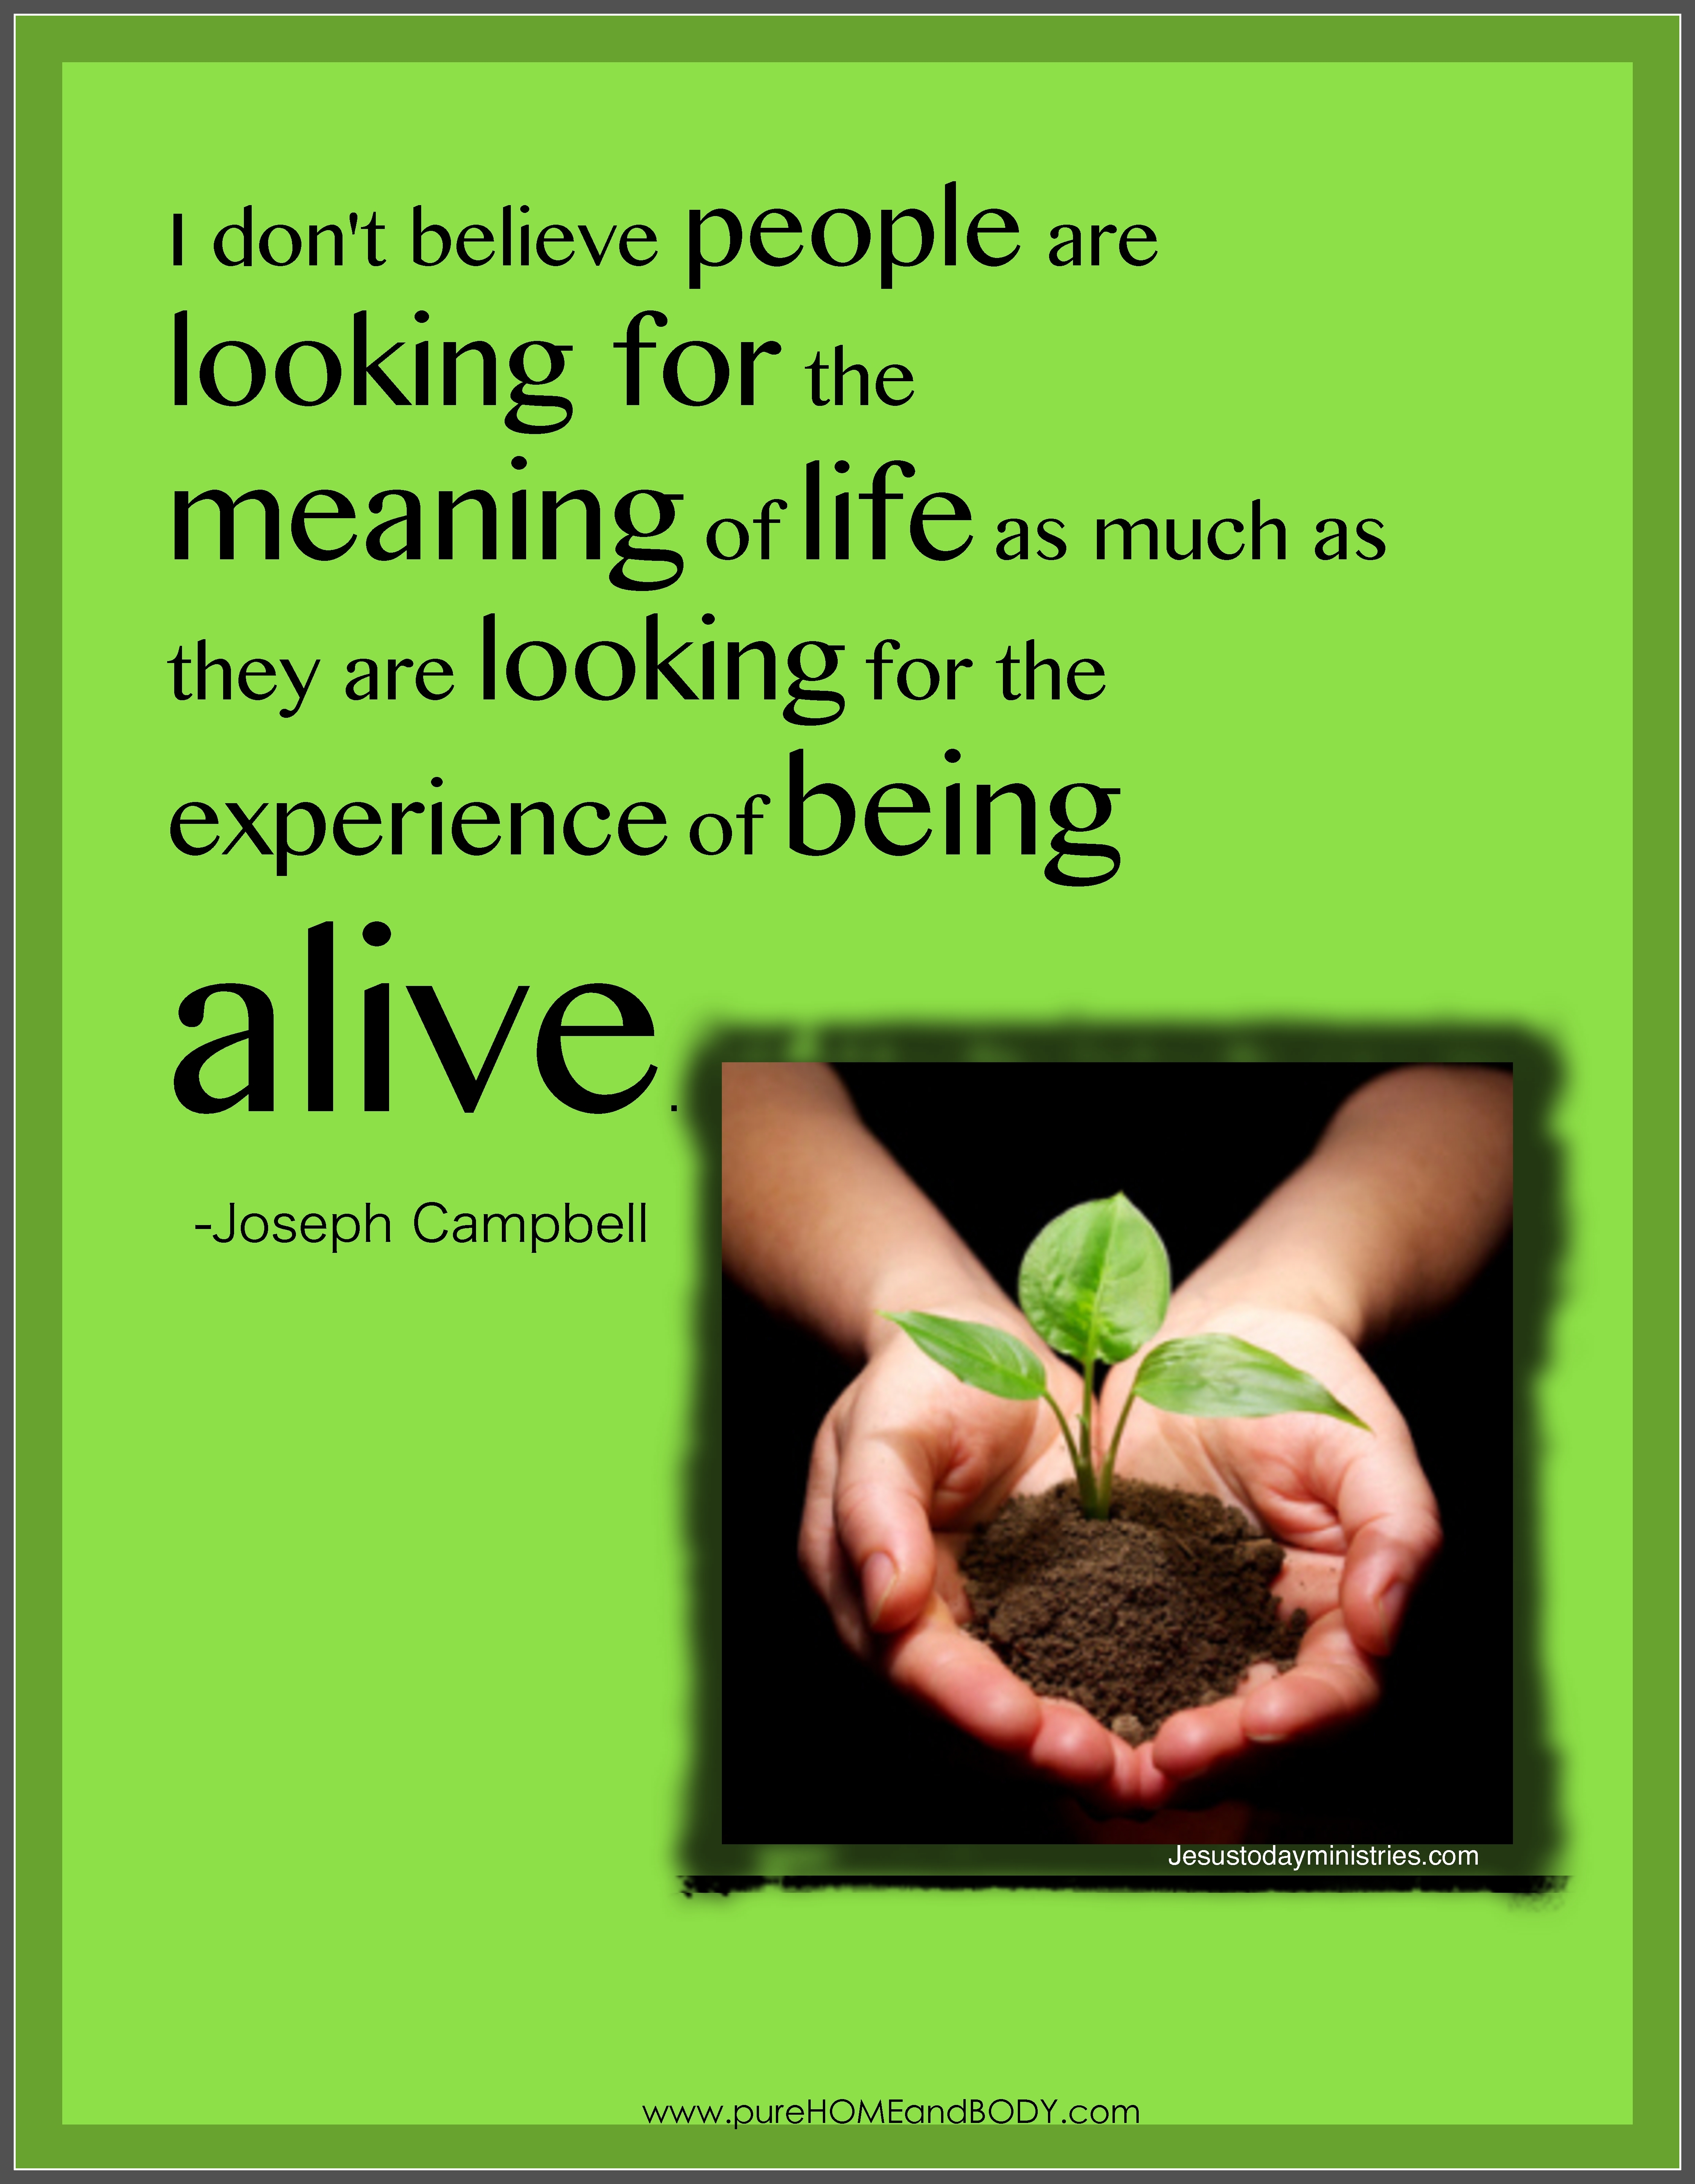 Joseph Campbell's quote #7